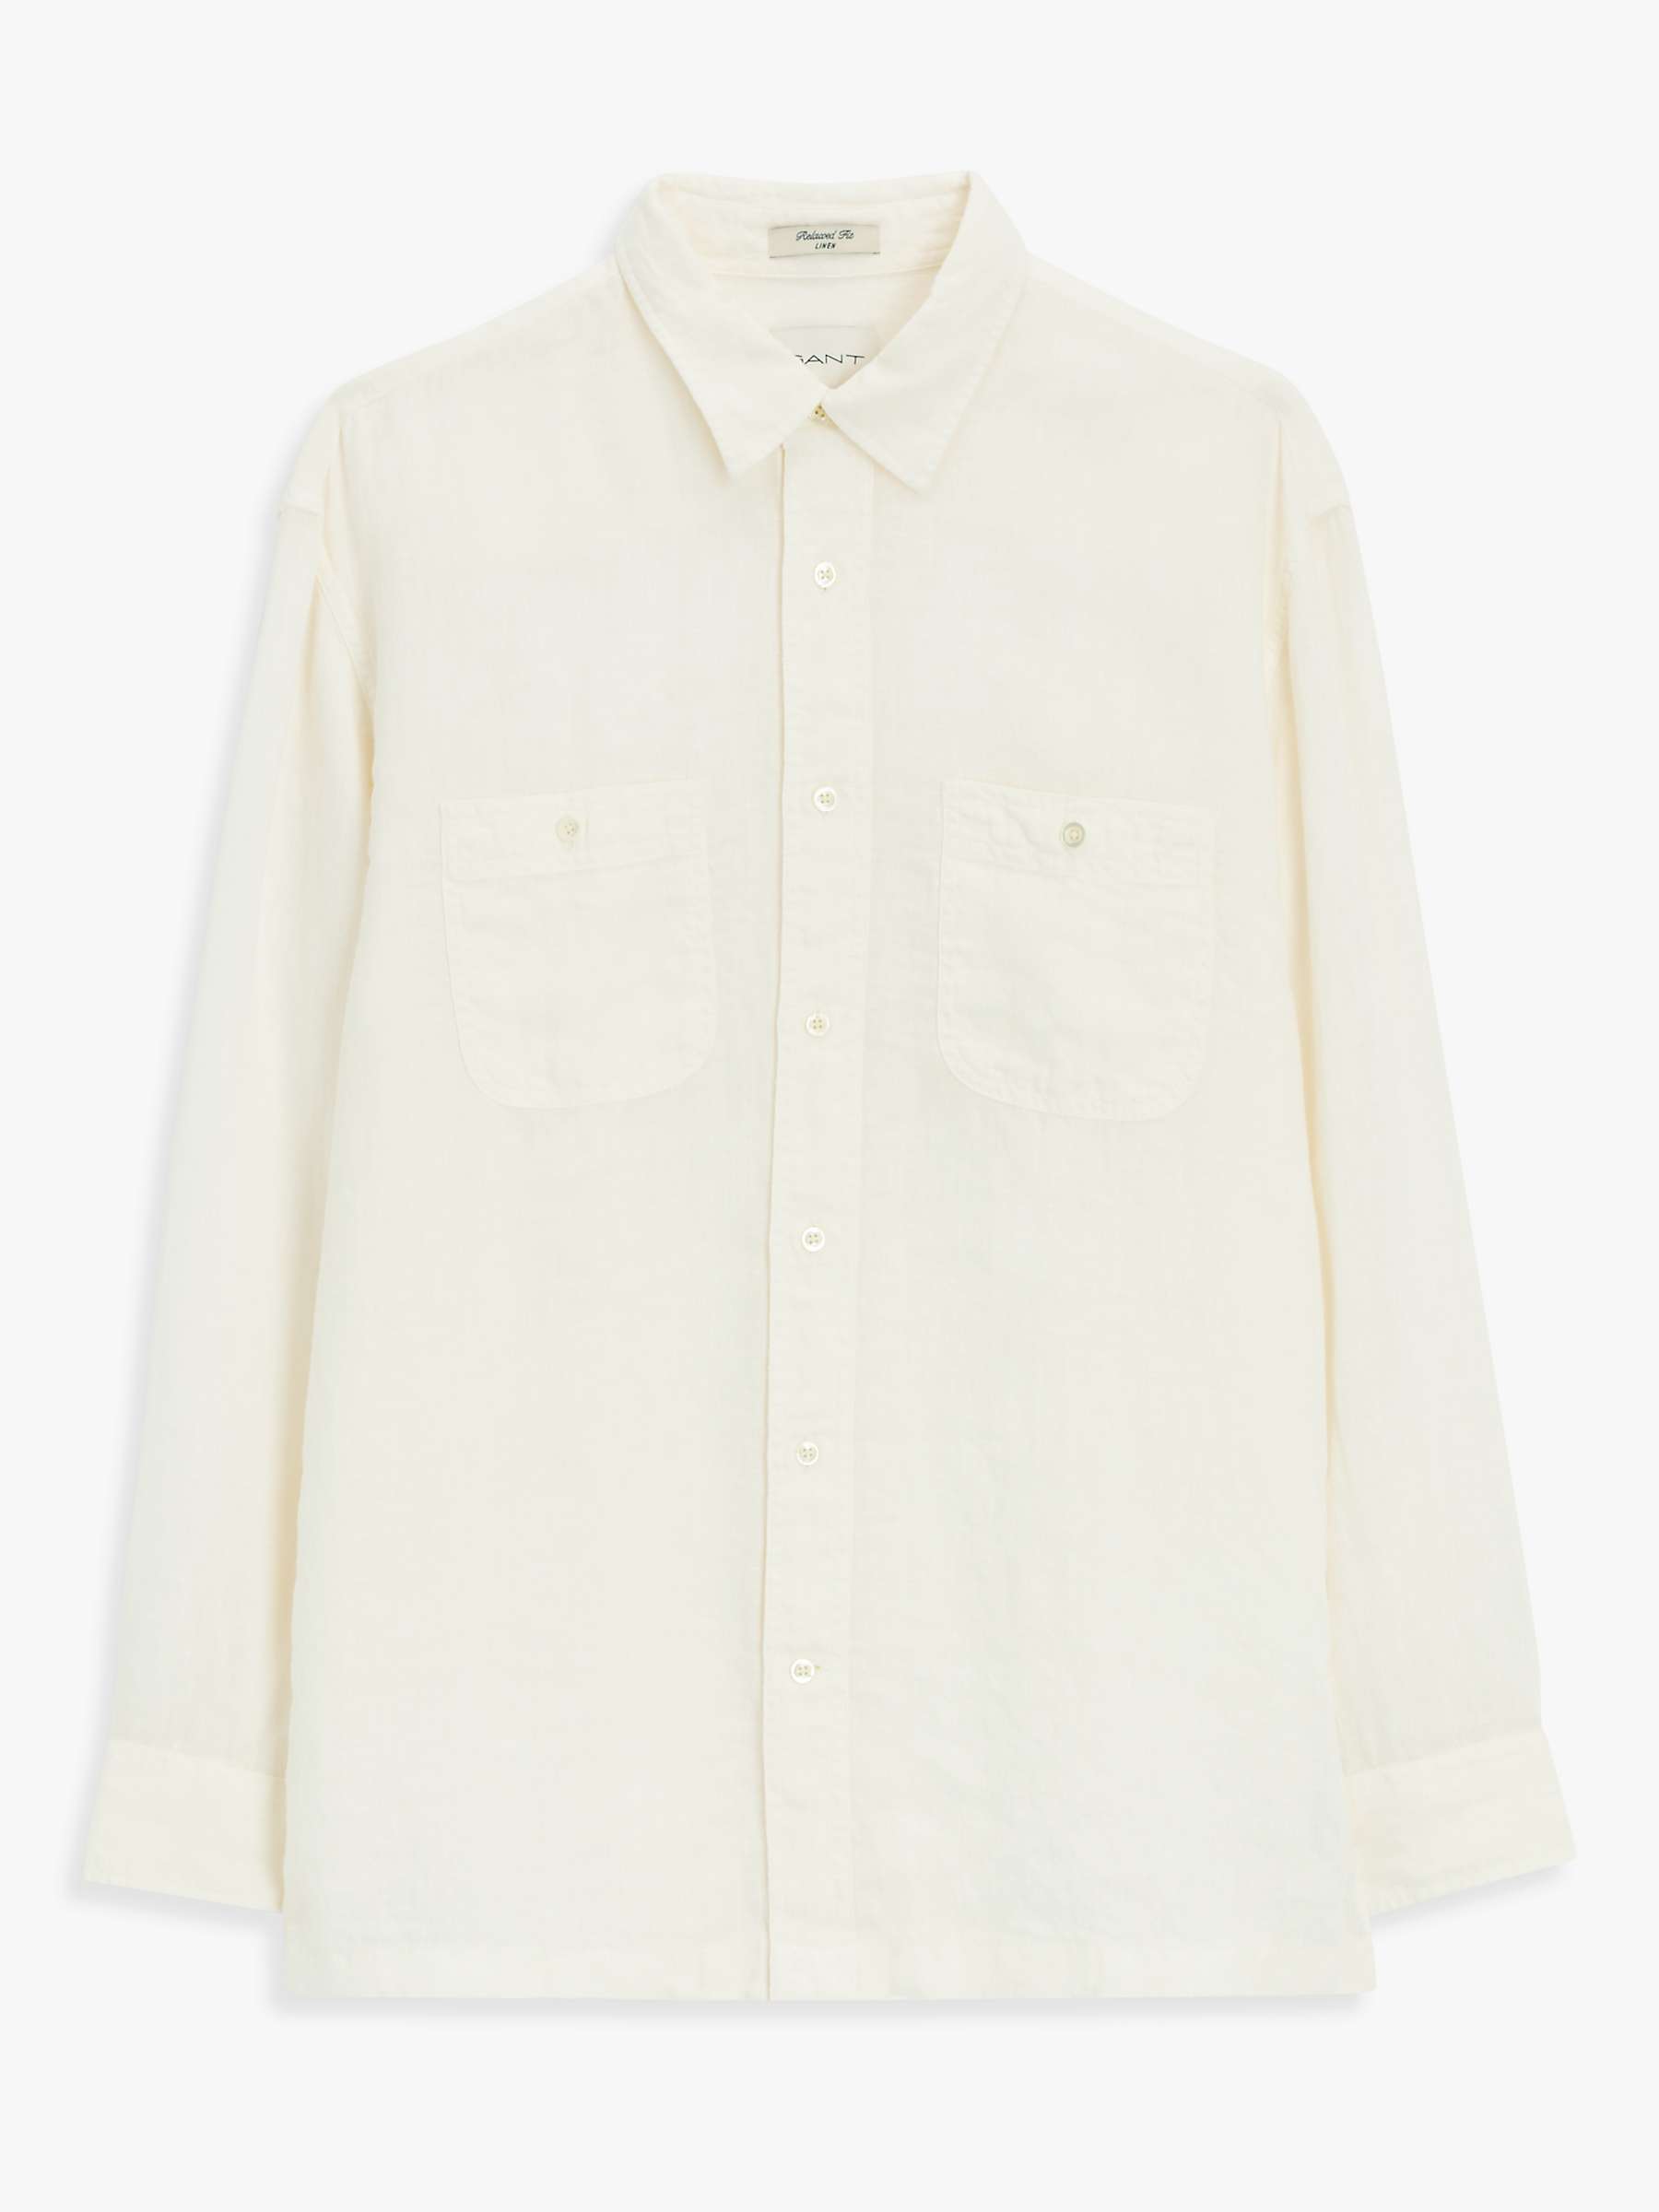 GANT Garment Dyed Linen Shirt, Cream at John Lewis & Partners